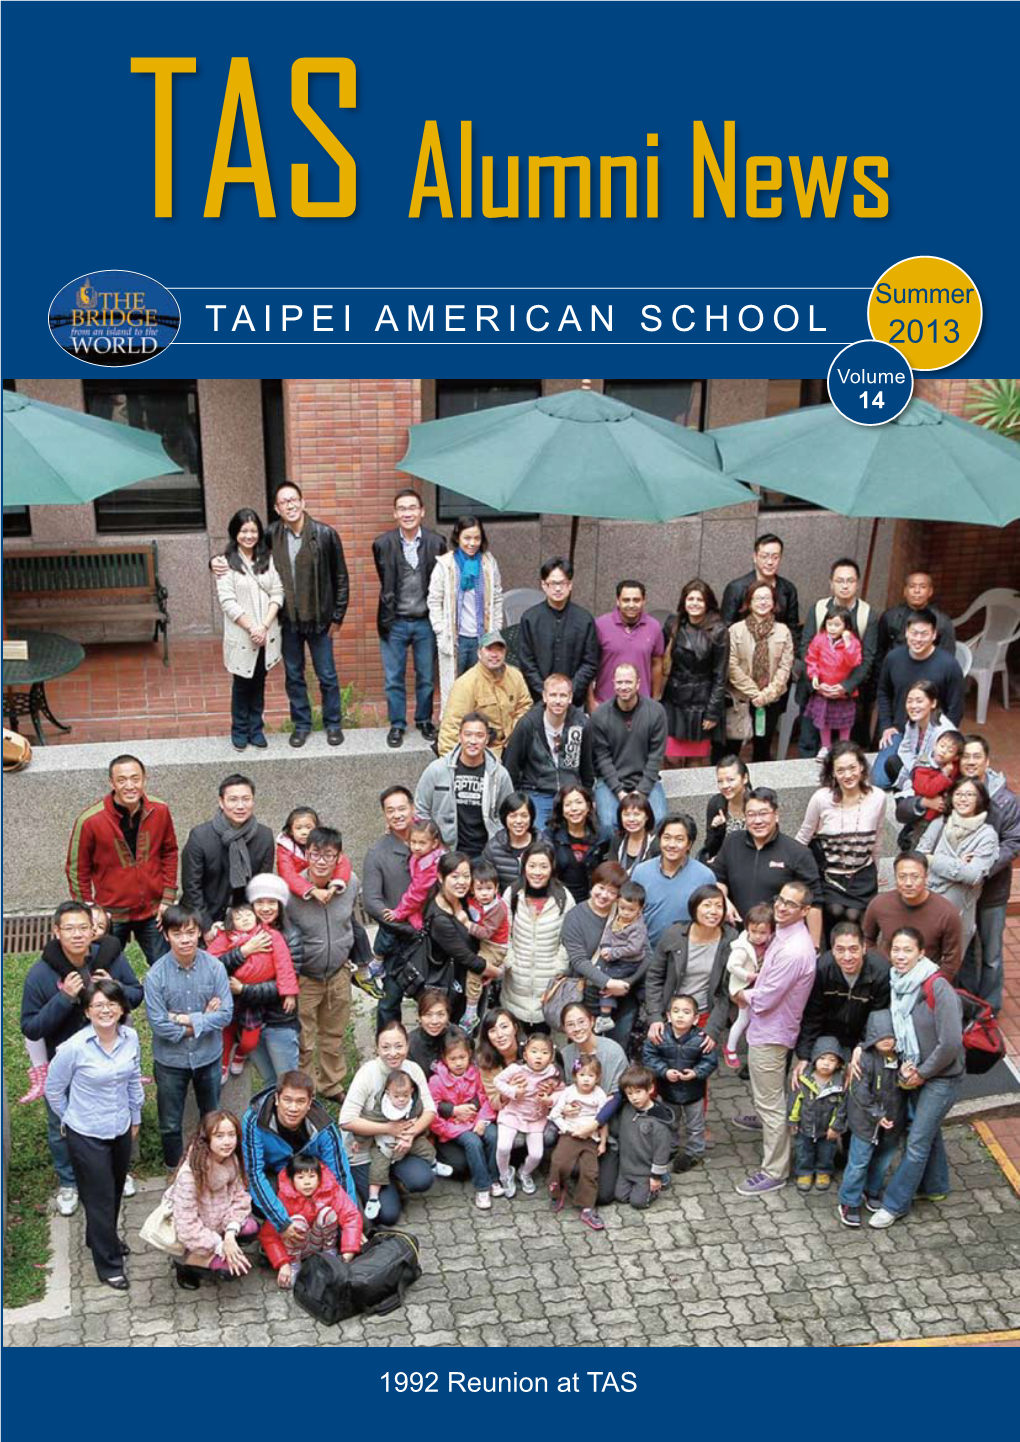 TAS Alumni News Volume 14 Summer 2013